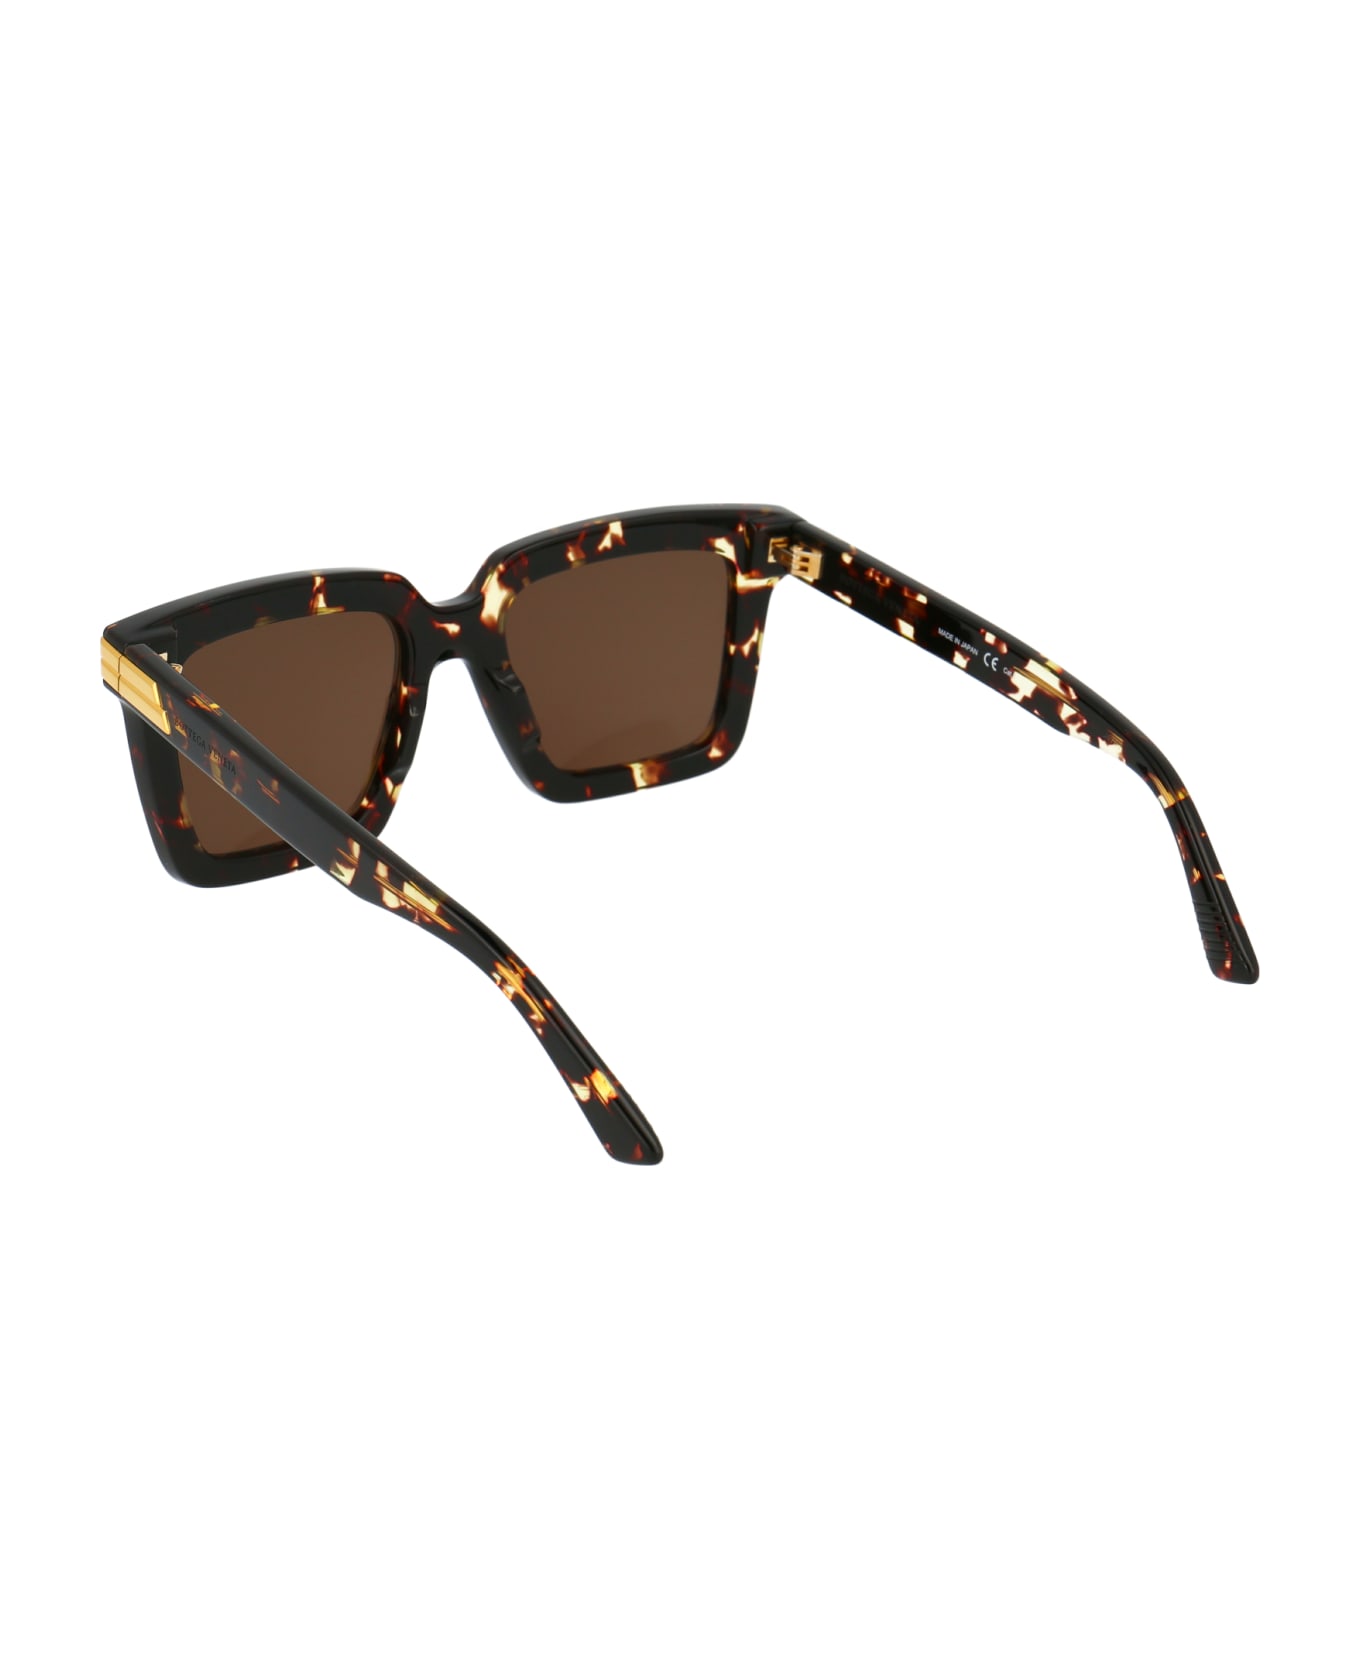 Bottega Veneta Eyewear Bv1005s Sunglasses - 002 HAVANA HAVANA BROWN